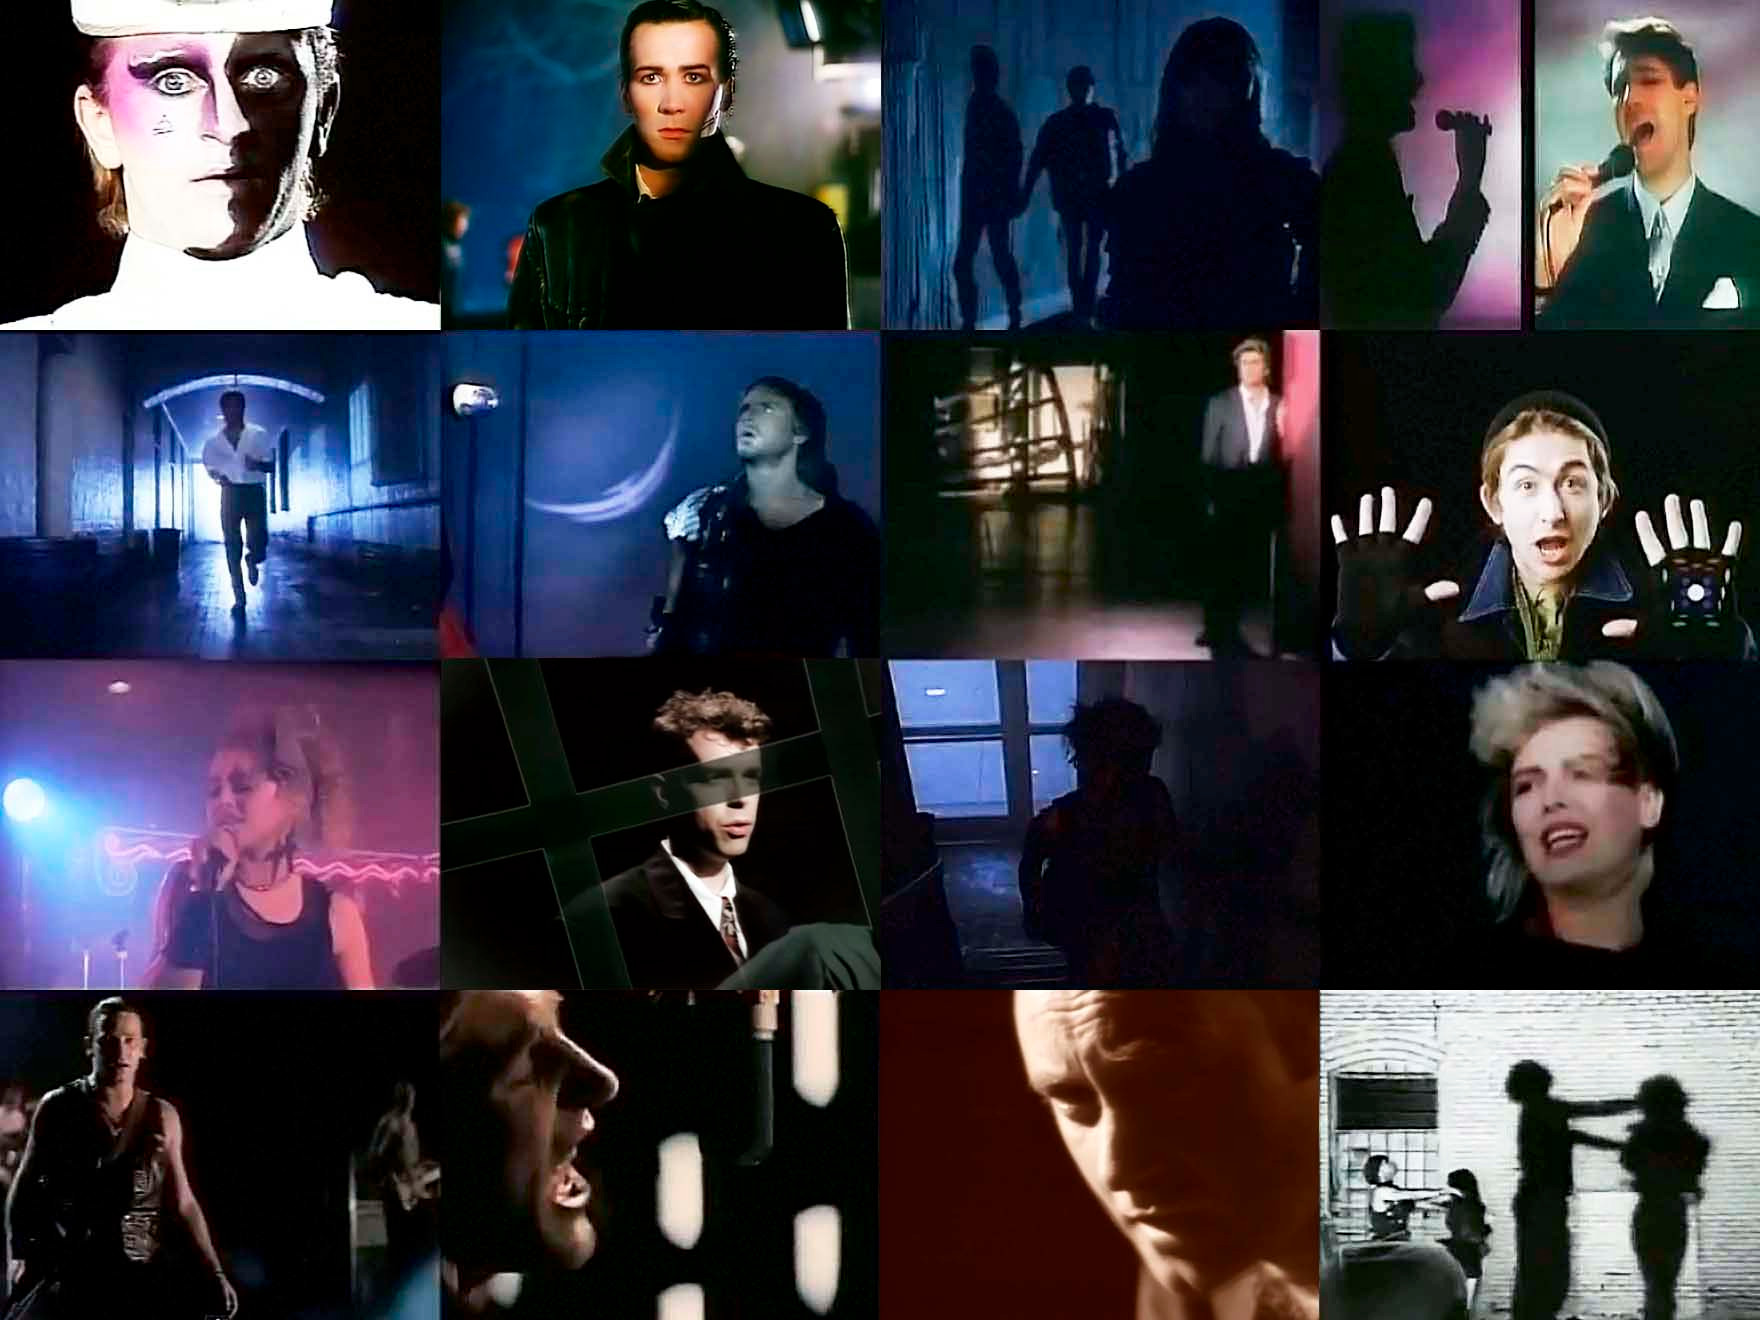 Видеоклипы 80-х гг. Слева направо, сверху вниз: (1) Visage&nbsp;— «Fade to Grey» (1980) | (2) The Human League&nbsp;— «Don’t You Want Me» (1981) | (3) Rick Springfield&nbsp;— «Don’t Talk to Strangers» (1982) | (4) Spandau Ballet&nbsp;— «True» (1983) | (5) Corey Hart&nbsp;— «Sunglasses at Night» (1984) | (6) Duran Duran&nbsp;— «Wild Boys» (1984) | (7) George Michael&nbsp;— «Careless Whisper» (1984) | (8) Talk Talk&nbsp;— «Such a Shame» (1984) | (9) Madonna&nbsp;— «Crazy for You» (1985) | (10) Pet Shop Boys&nbsp;— «Love Comes Quickly» (1986) | (11) Pat Benatar&nbsp;— «Love is a Battlefield» (1986) | (12) Kim Wilde&nbsp;— «You Keep Me Hangin’ On» (1987) | (13) U2&nbsp;— «With or without You» (1987) | (14) Def Leppard&nbsp;— «Love Bites» (1988) | (15) Phil Collins&nbsp;— «Another Day in Paradise» (1989) | (16) Richard Marx&nbsp;— «Satisfied» (1989)